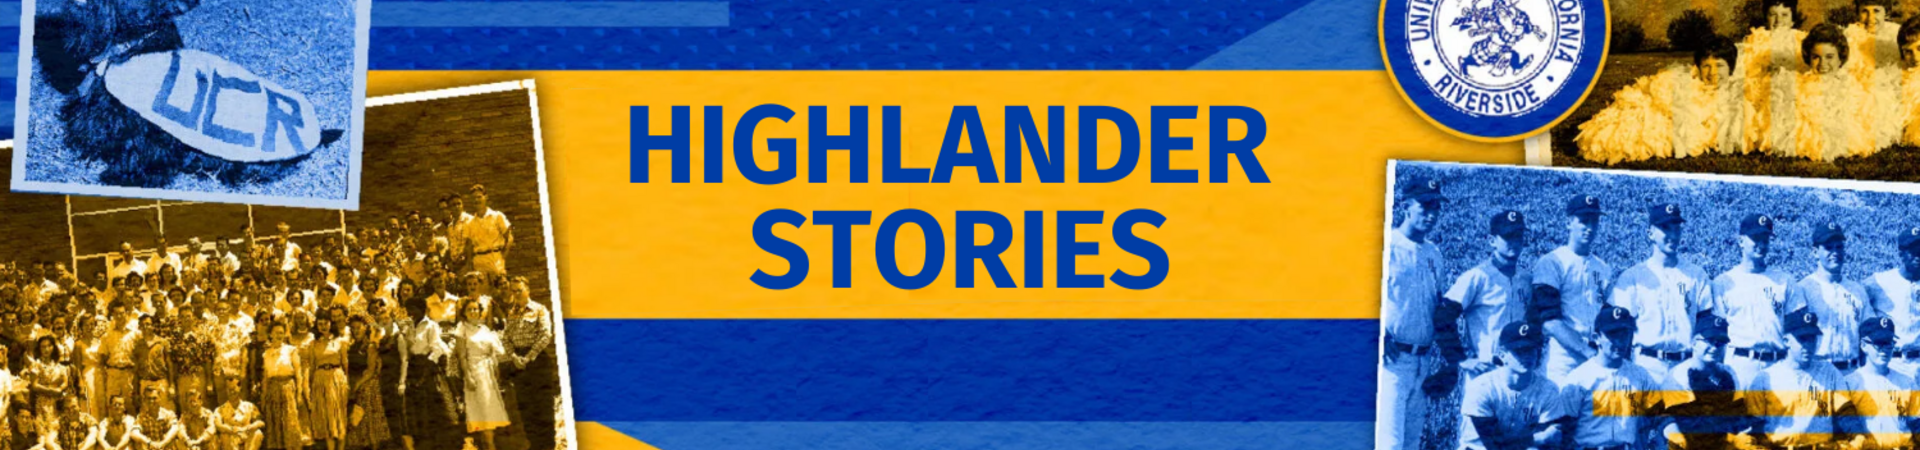 Highlander Stories